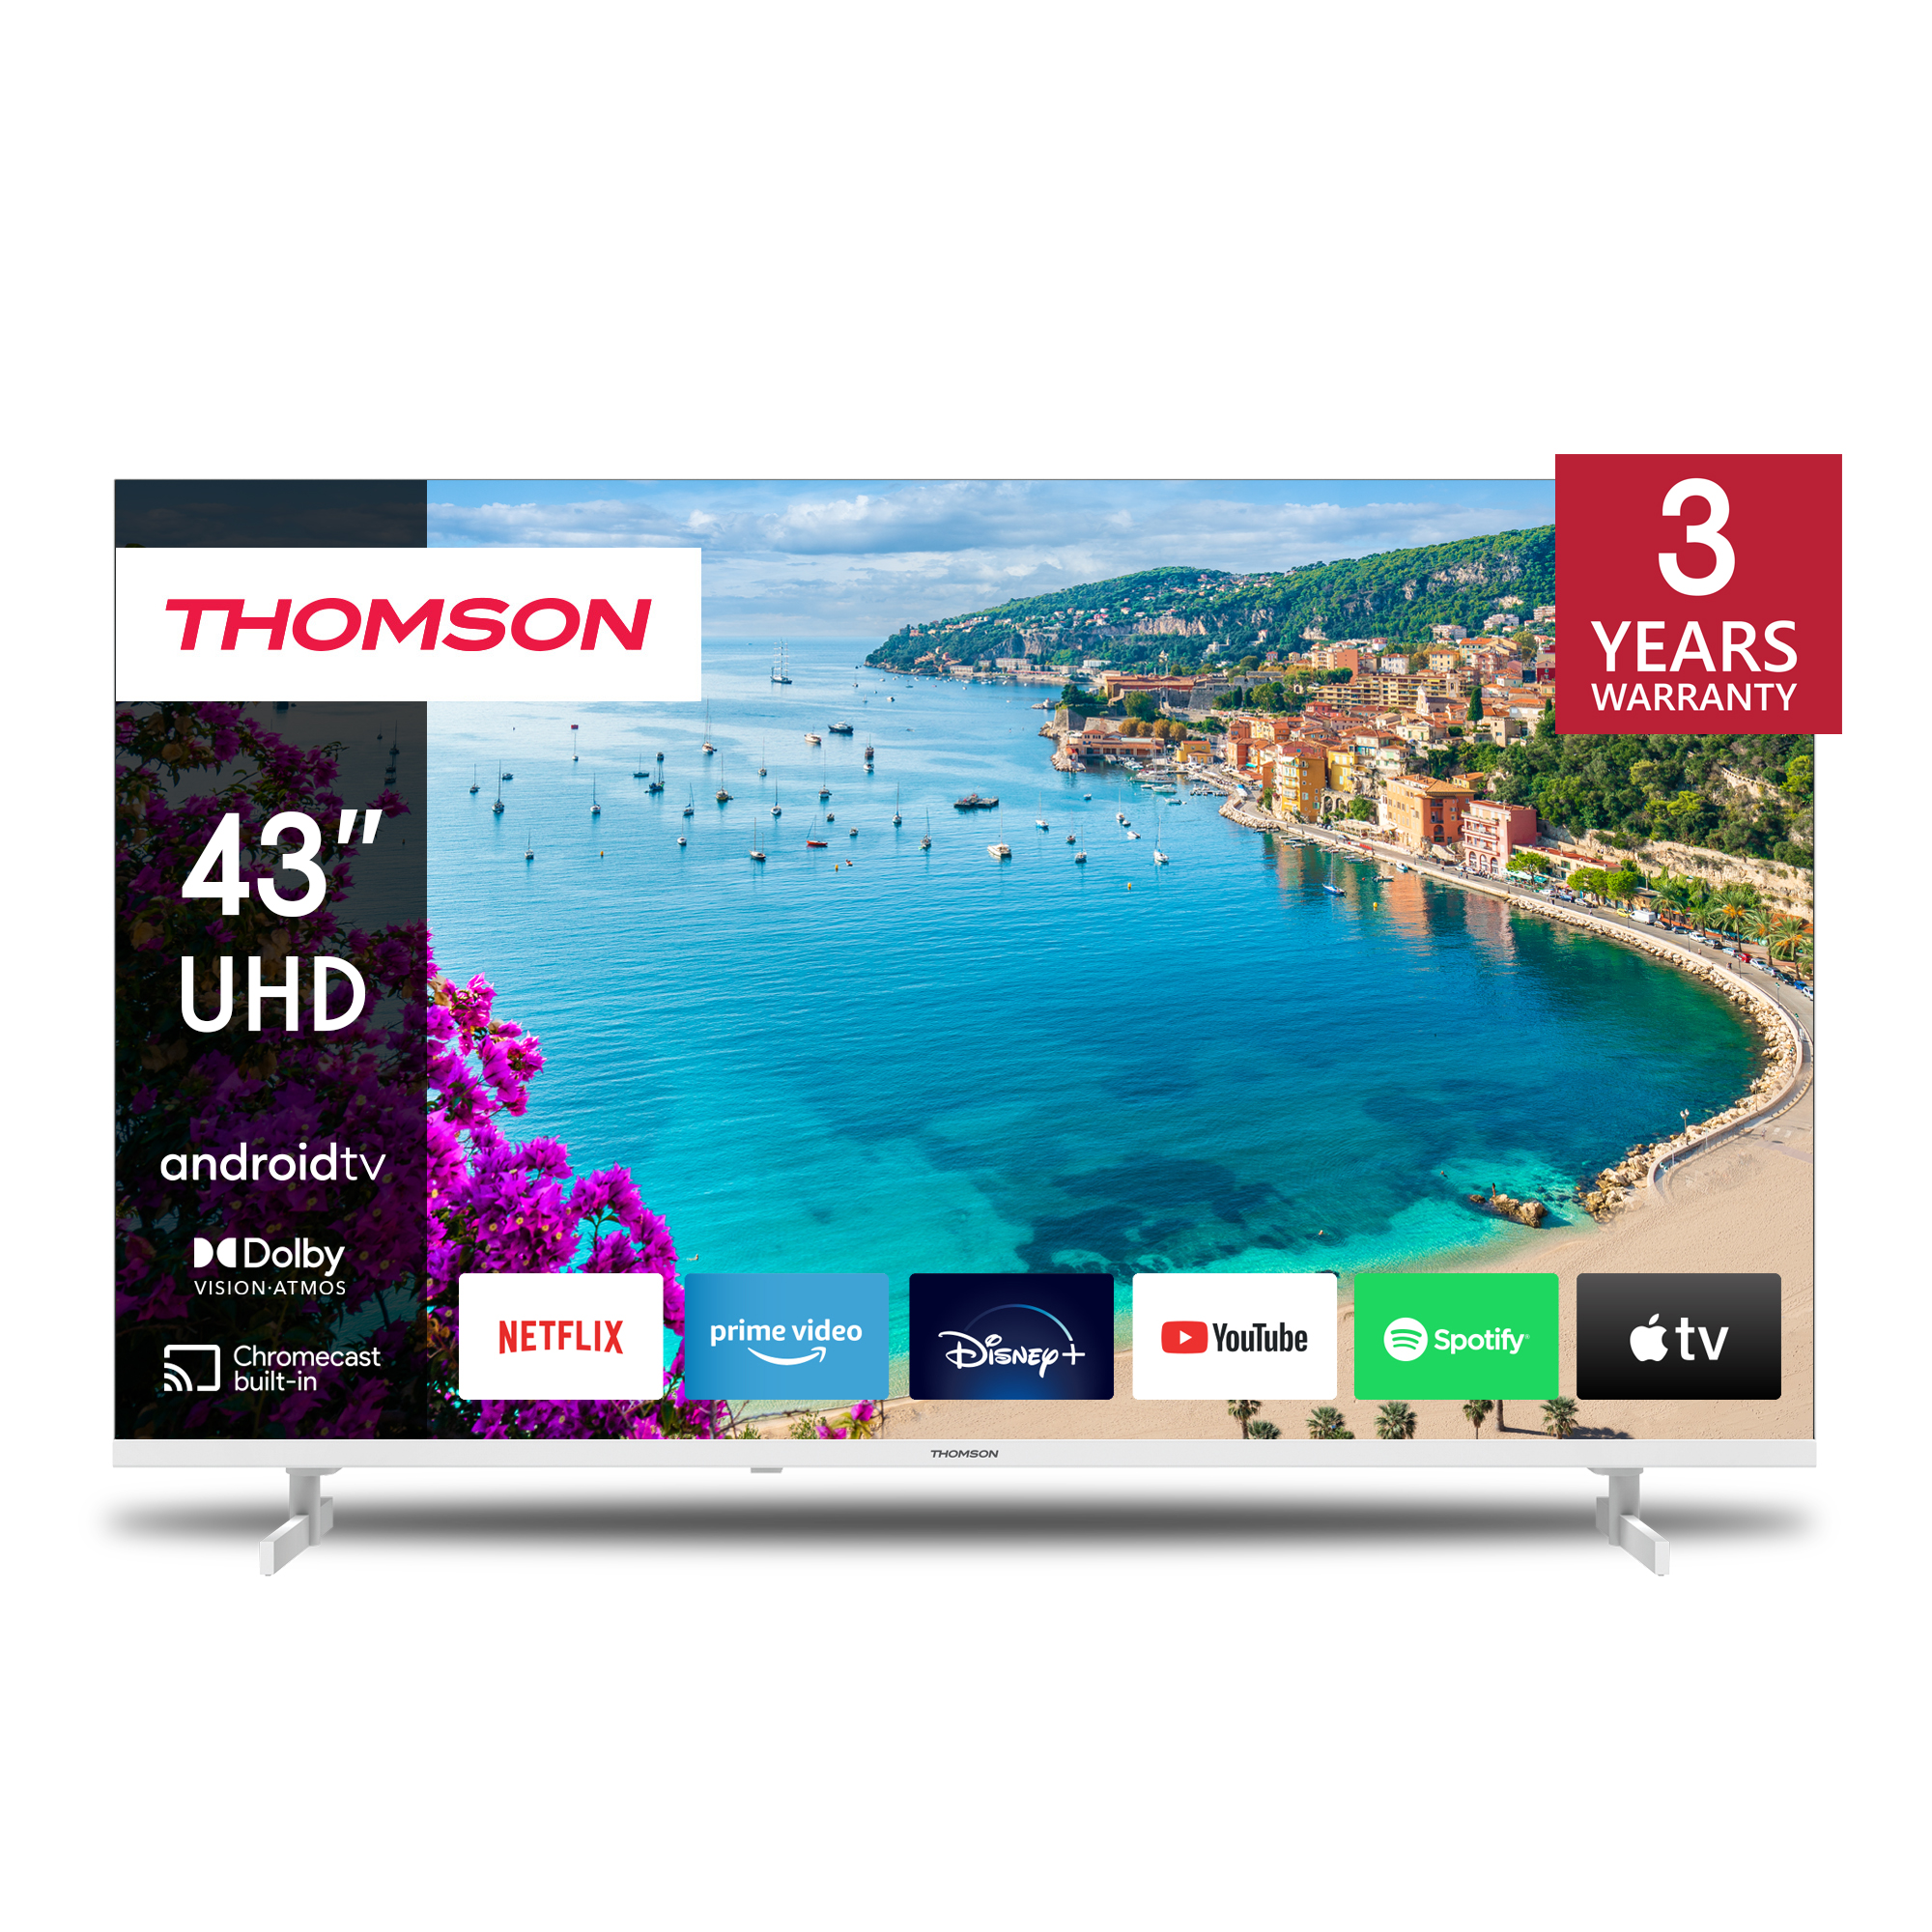 Thomson Android TV 43" UHD White